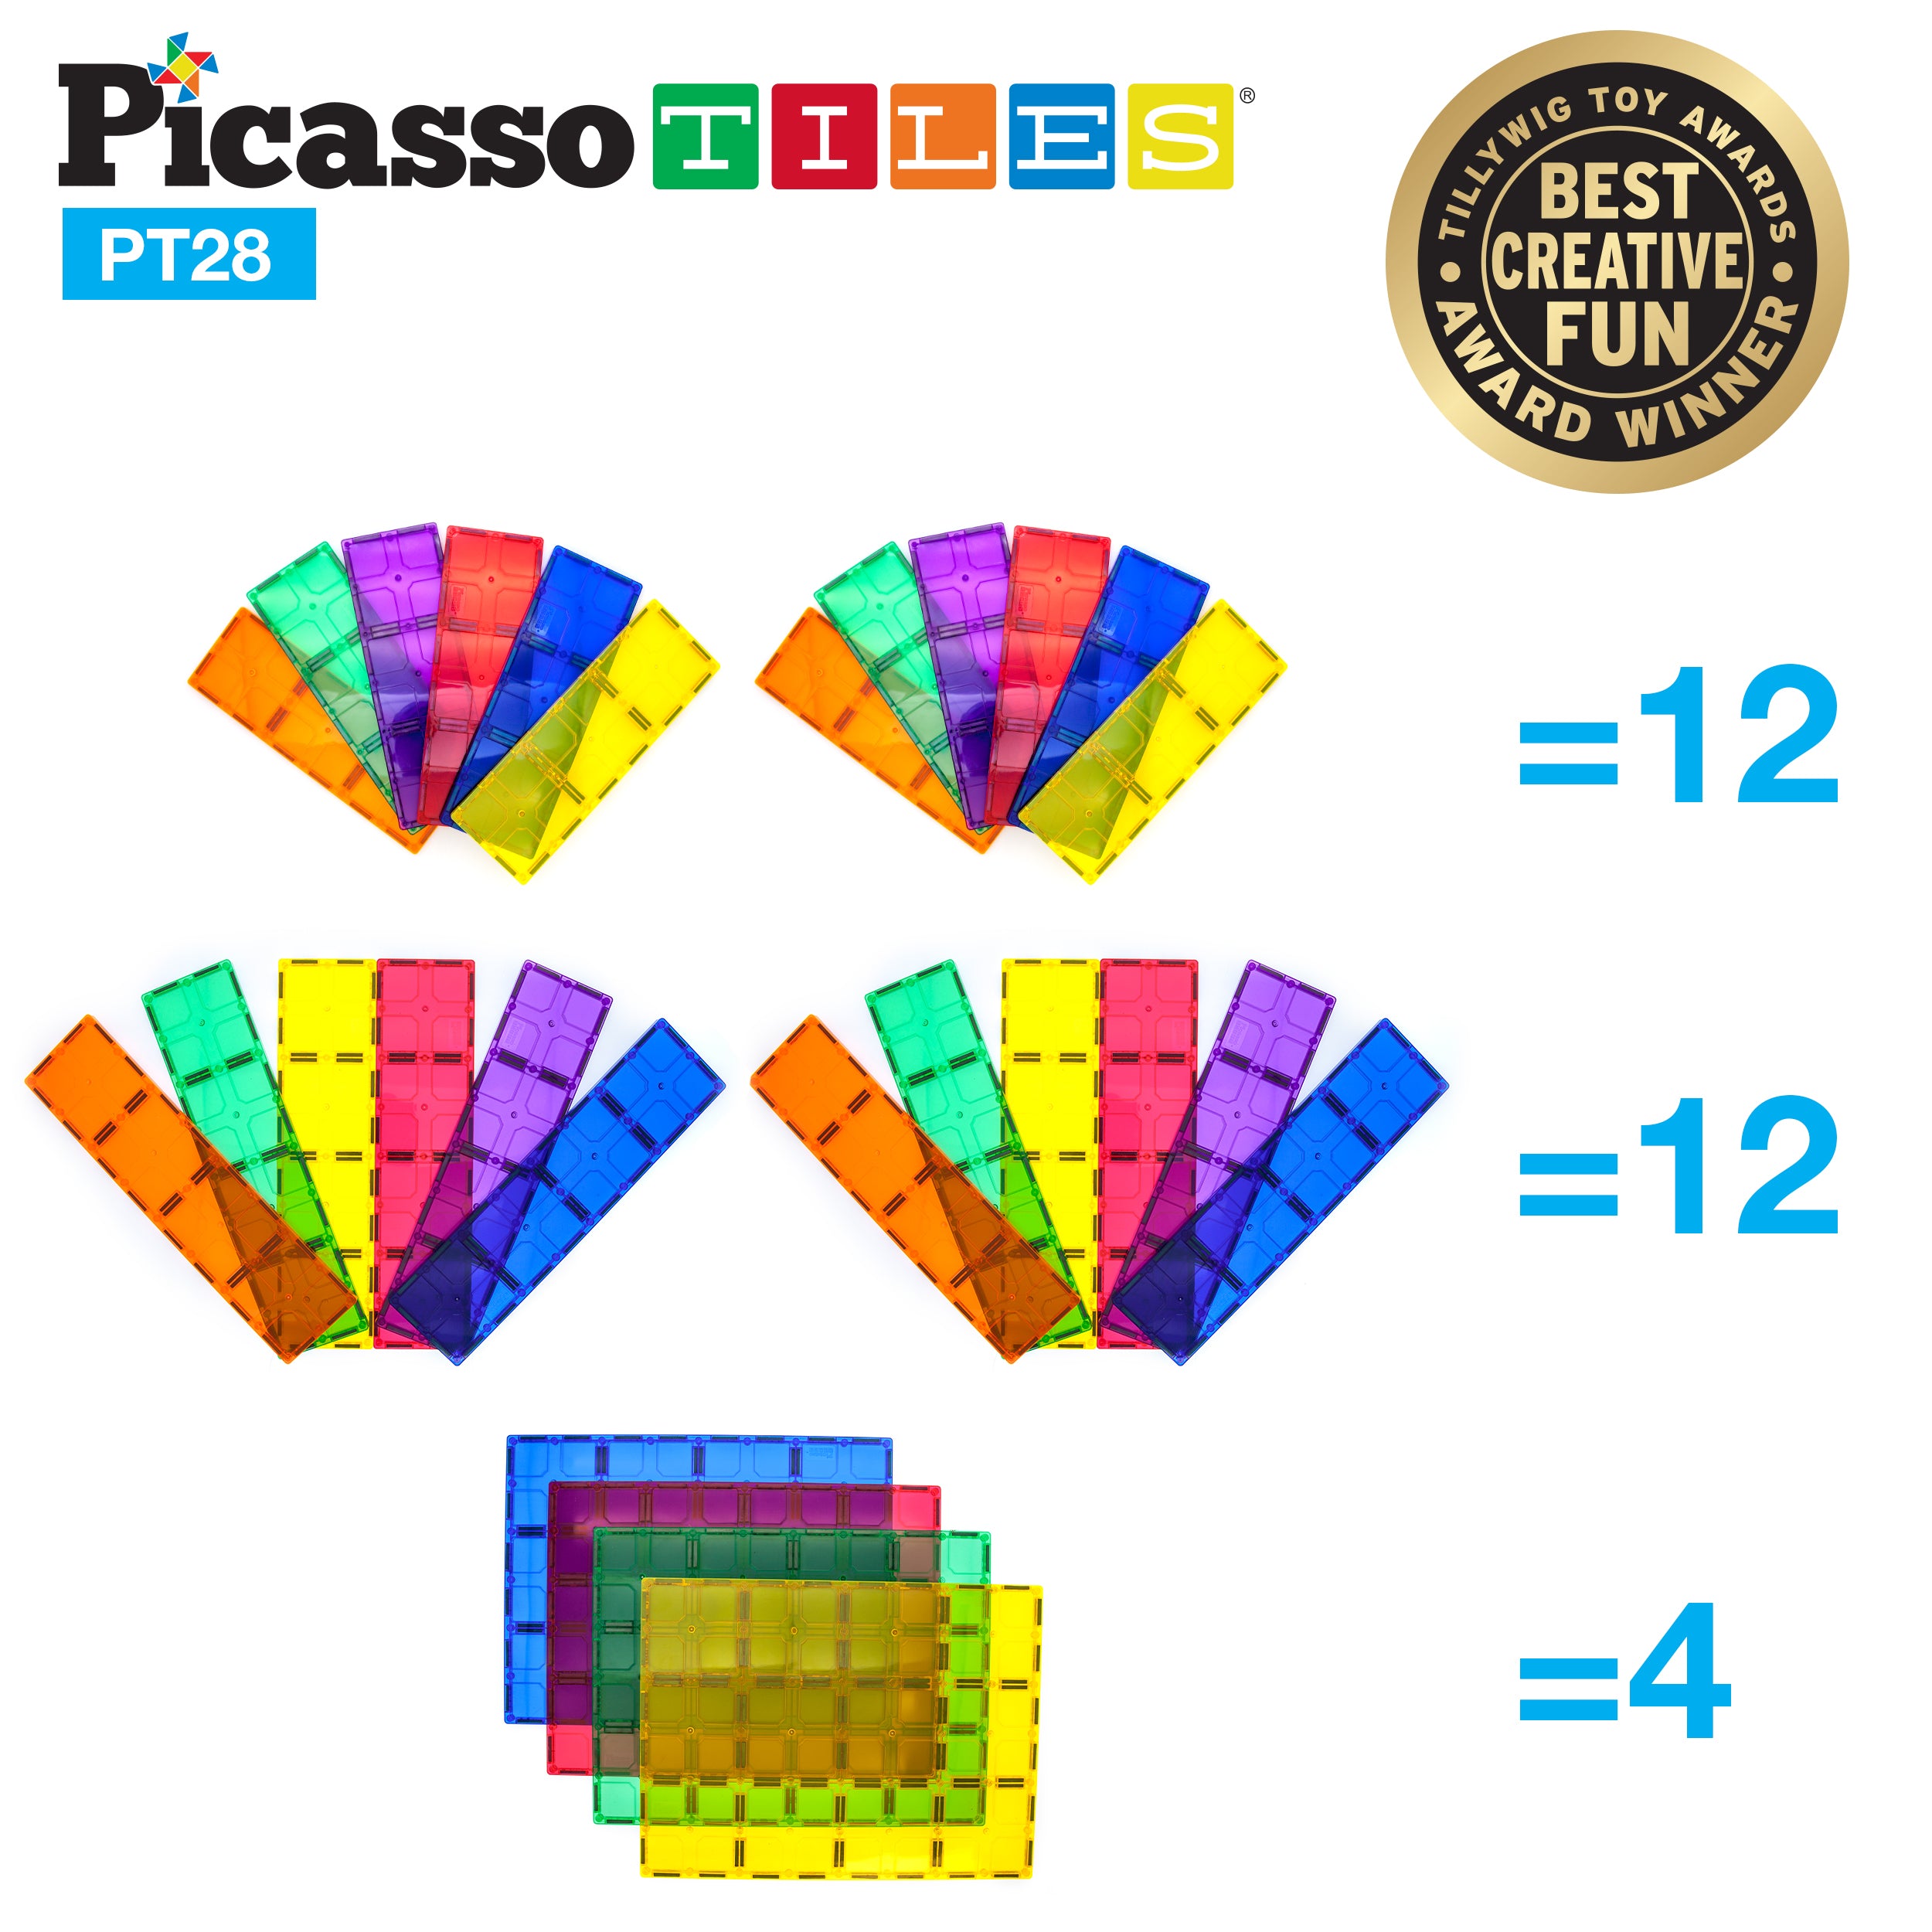 PicassoTiles Extra Large Magnet Tile Foundation Plates - 28 Pieces